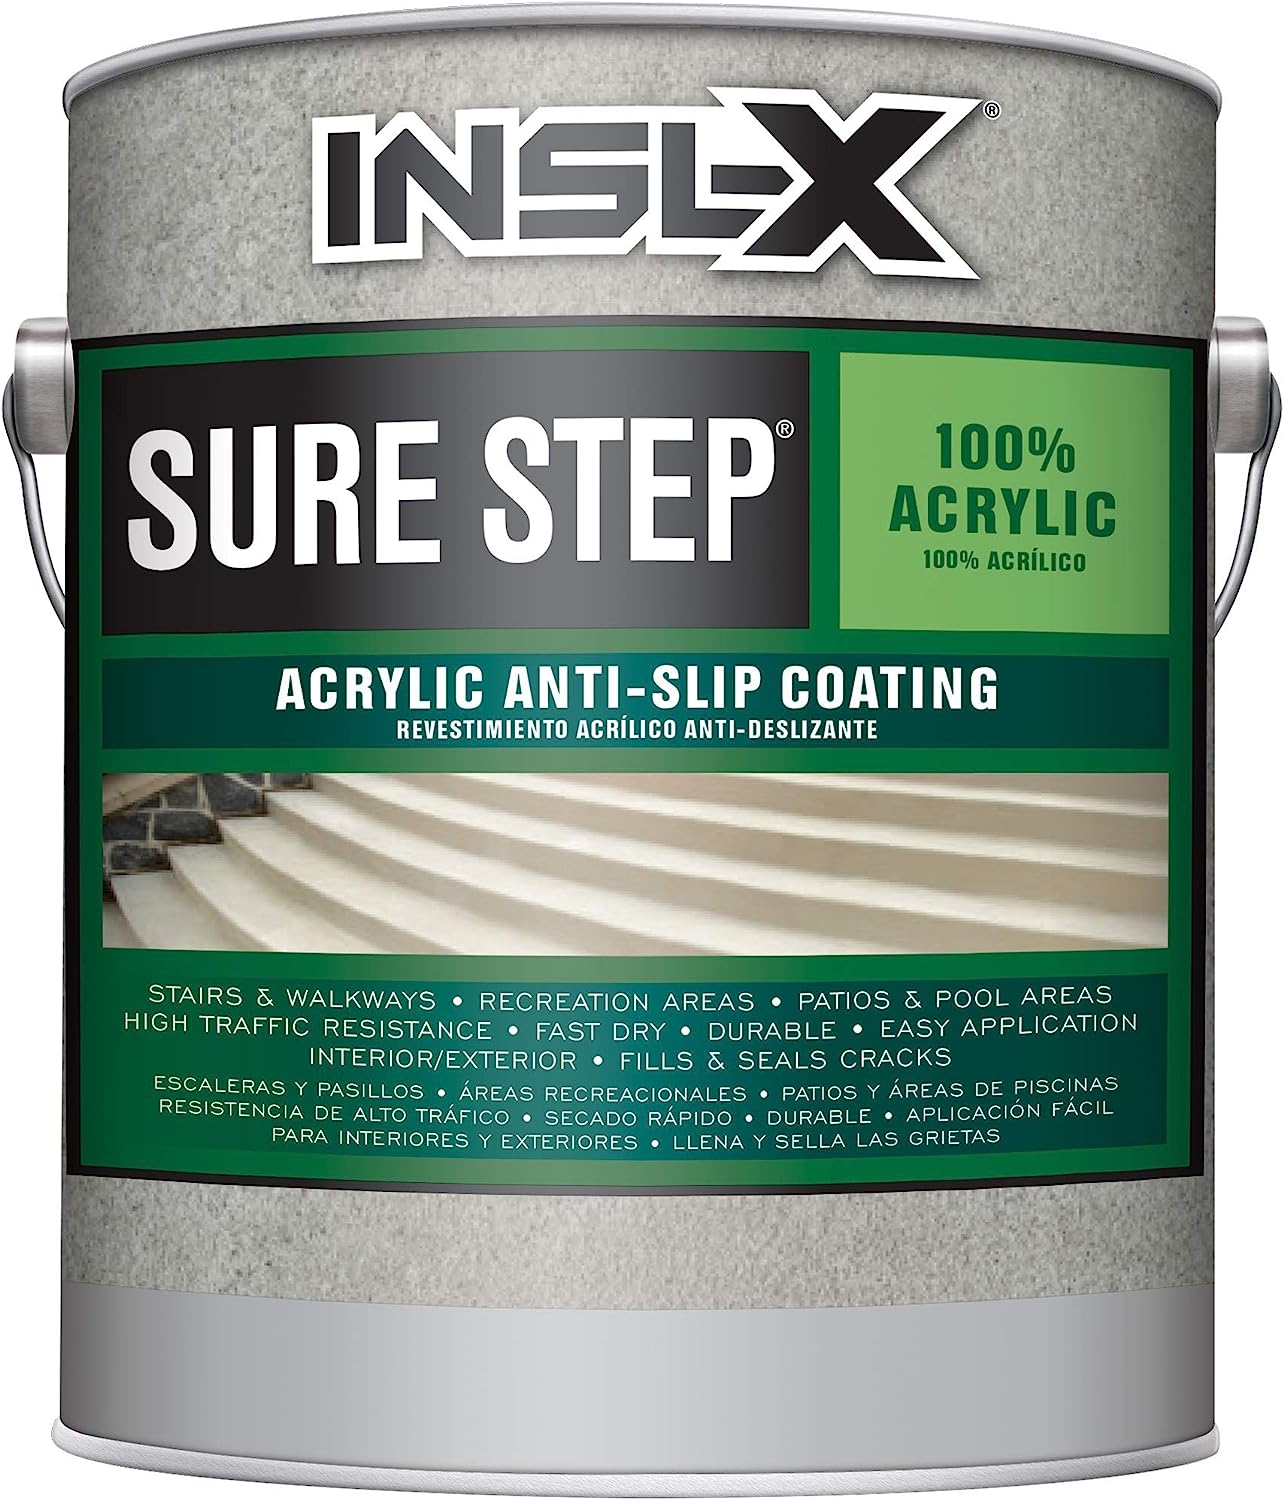 INSL-X SU031009A-01 Sure Step Acrylic Anti-Slip [...]